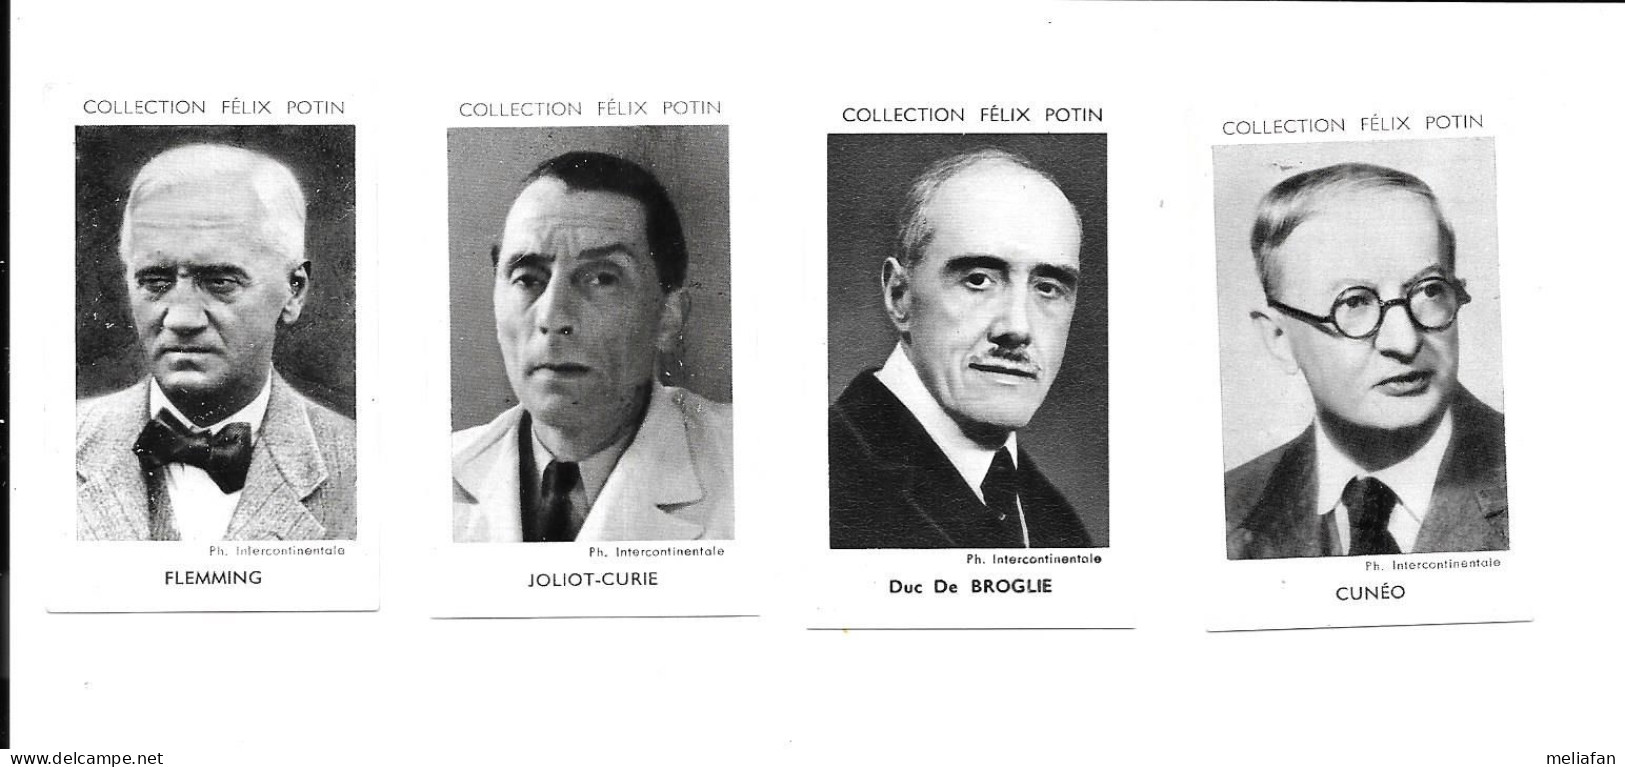 DA71 - VIGNETTE FELIX POTIN ALBUM 1954 - BERNARD CUNEO - DUC DE BROGLIE - JOLIOT CURIE - FLEMMING - Félix Potin